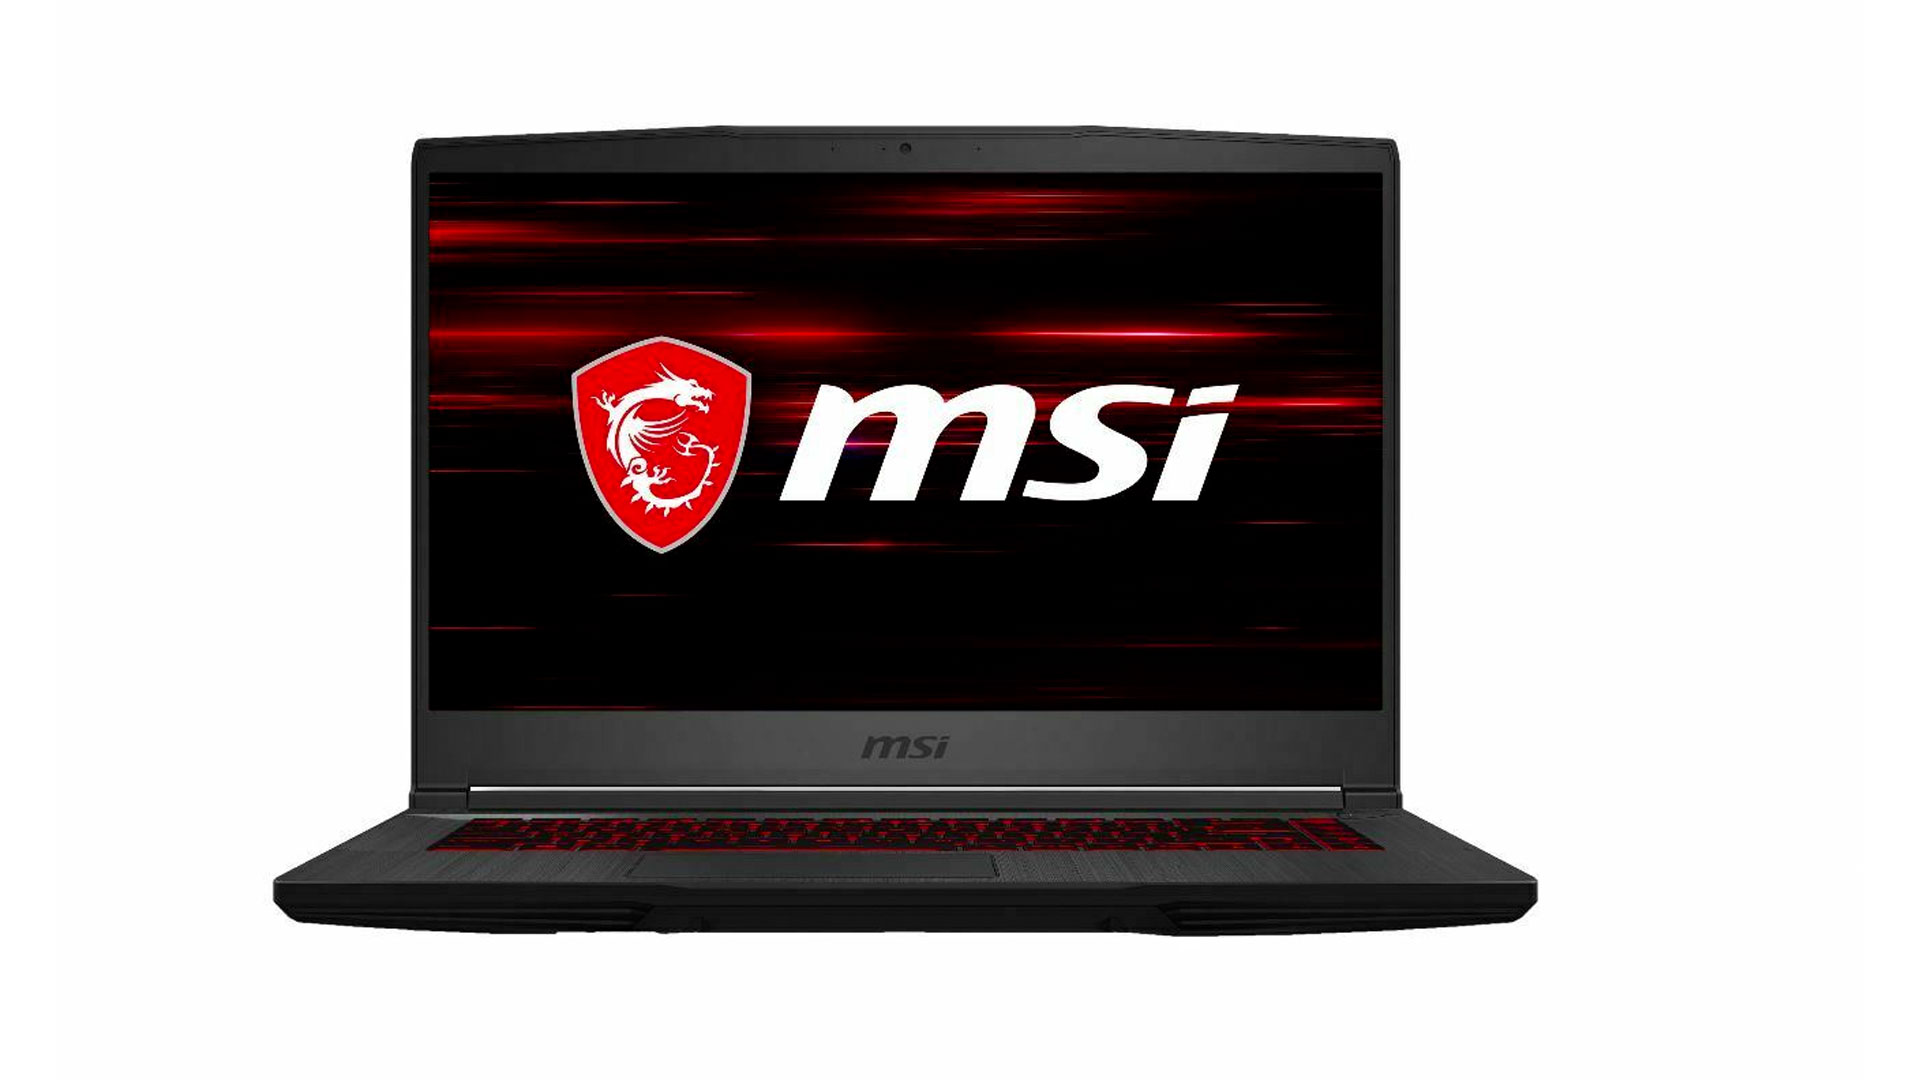 MSI's THIN gaming laptop has a RTX 2060 GPU + 512GB SSD for $849 (Reg